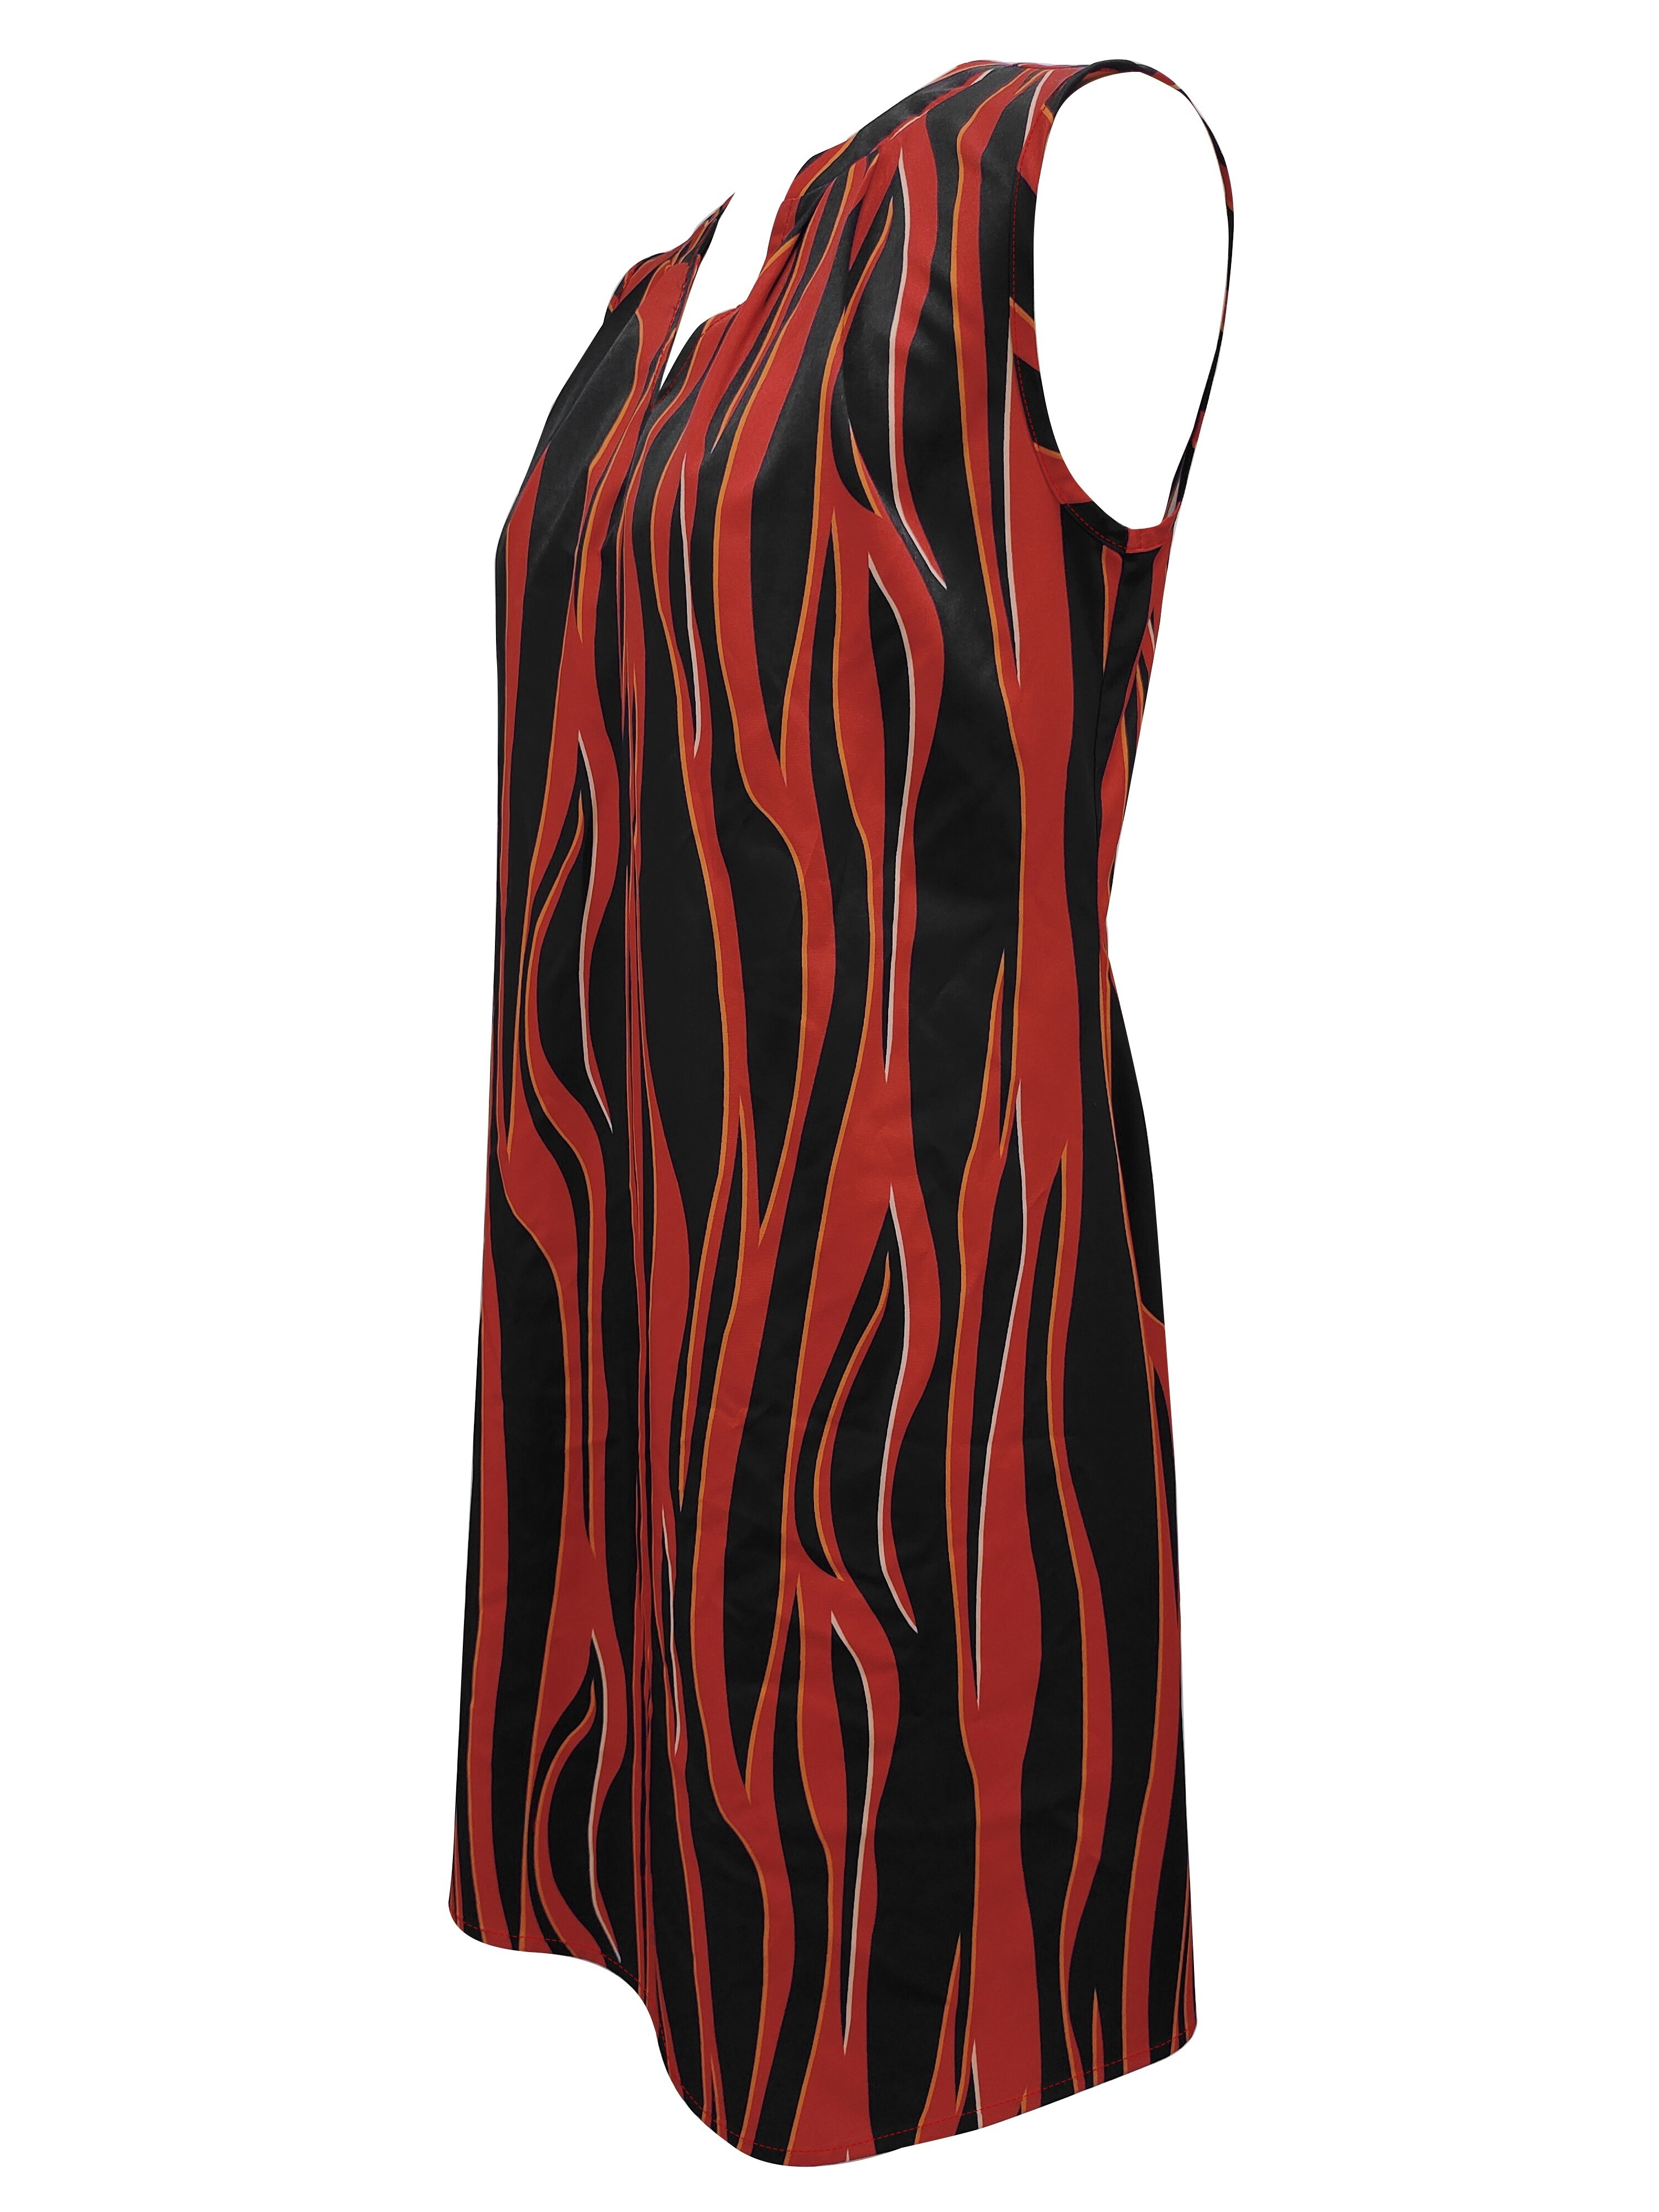 abstract ripple print dress casual v neck sleeveless dress womens clothing details 43